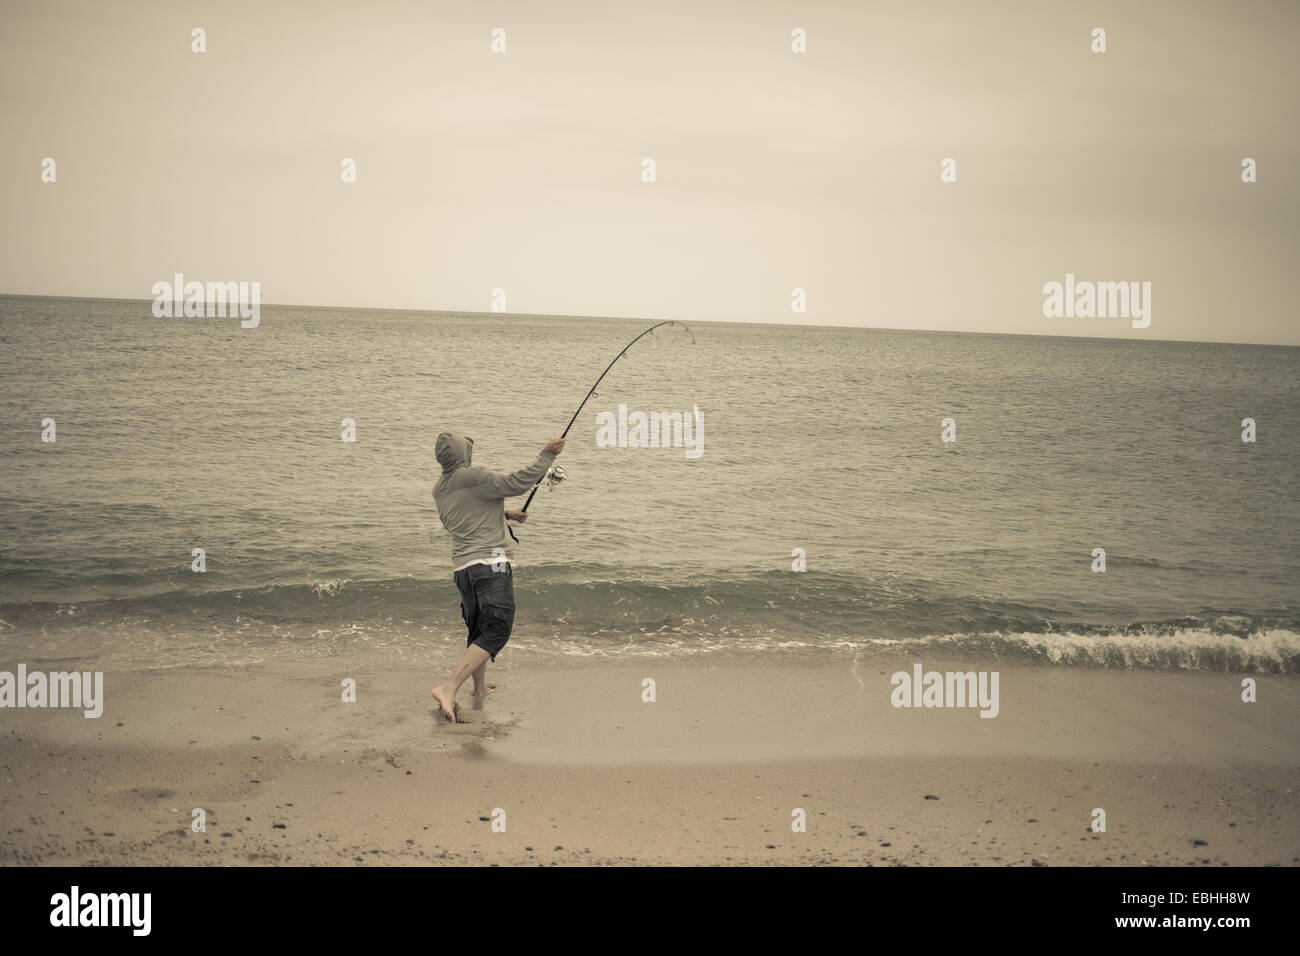 Fisherman casting fishing rod on beach, Truro, Massachusetts, Cape Cod, USA Stock Photo